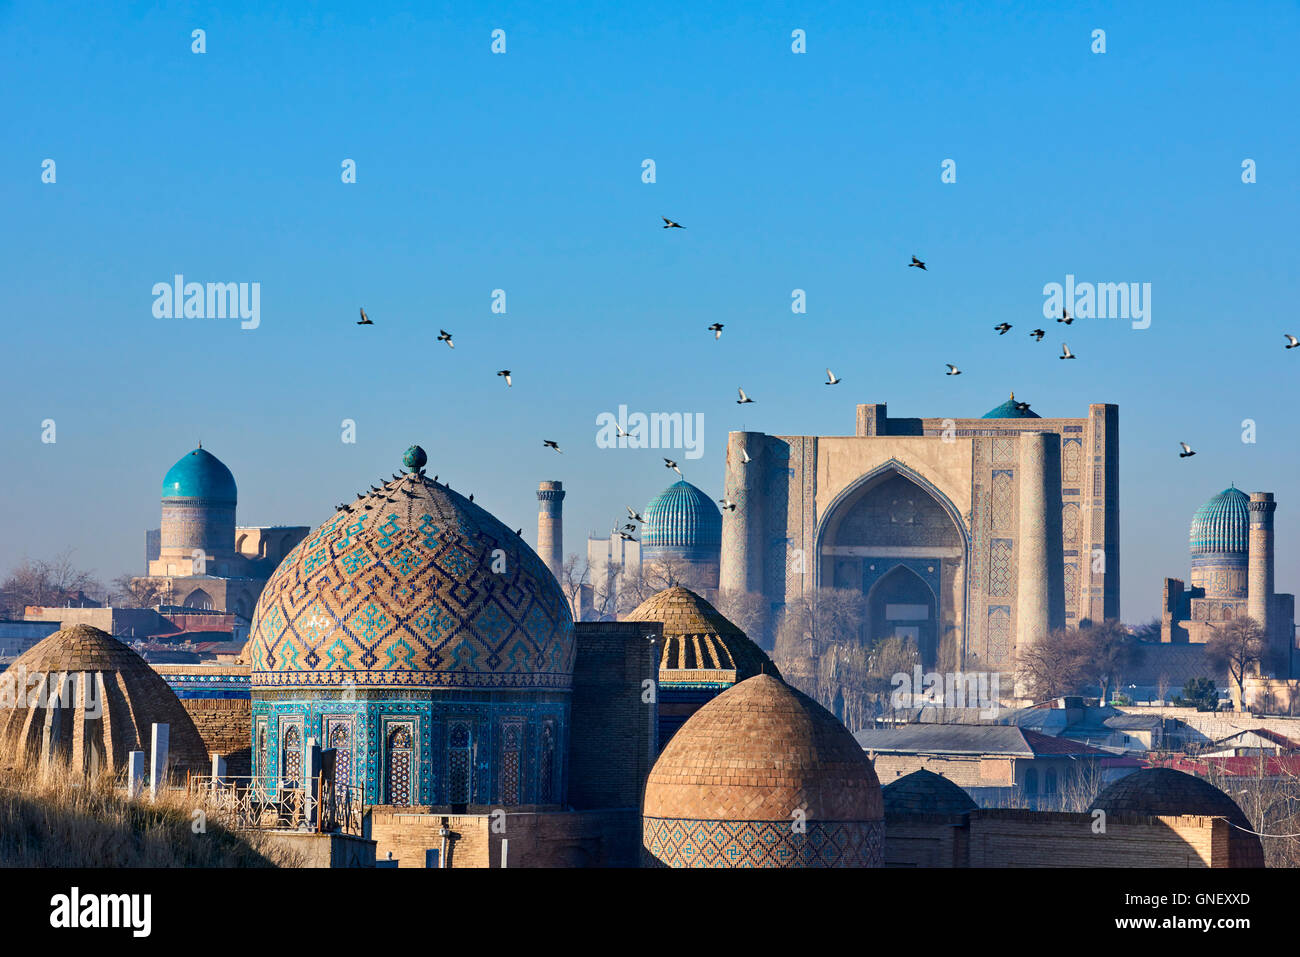 Uzbekistan, Samarkand, Unesco World Heritage, the Reghistan, Shah i Zinda mausoleum, Bibi Khanoum mosque Stock Photo